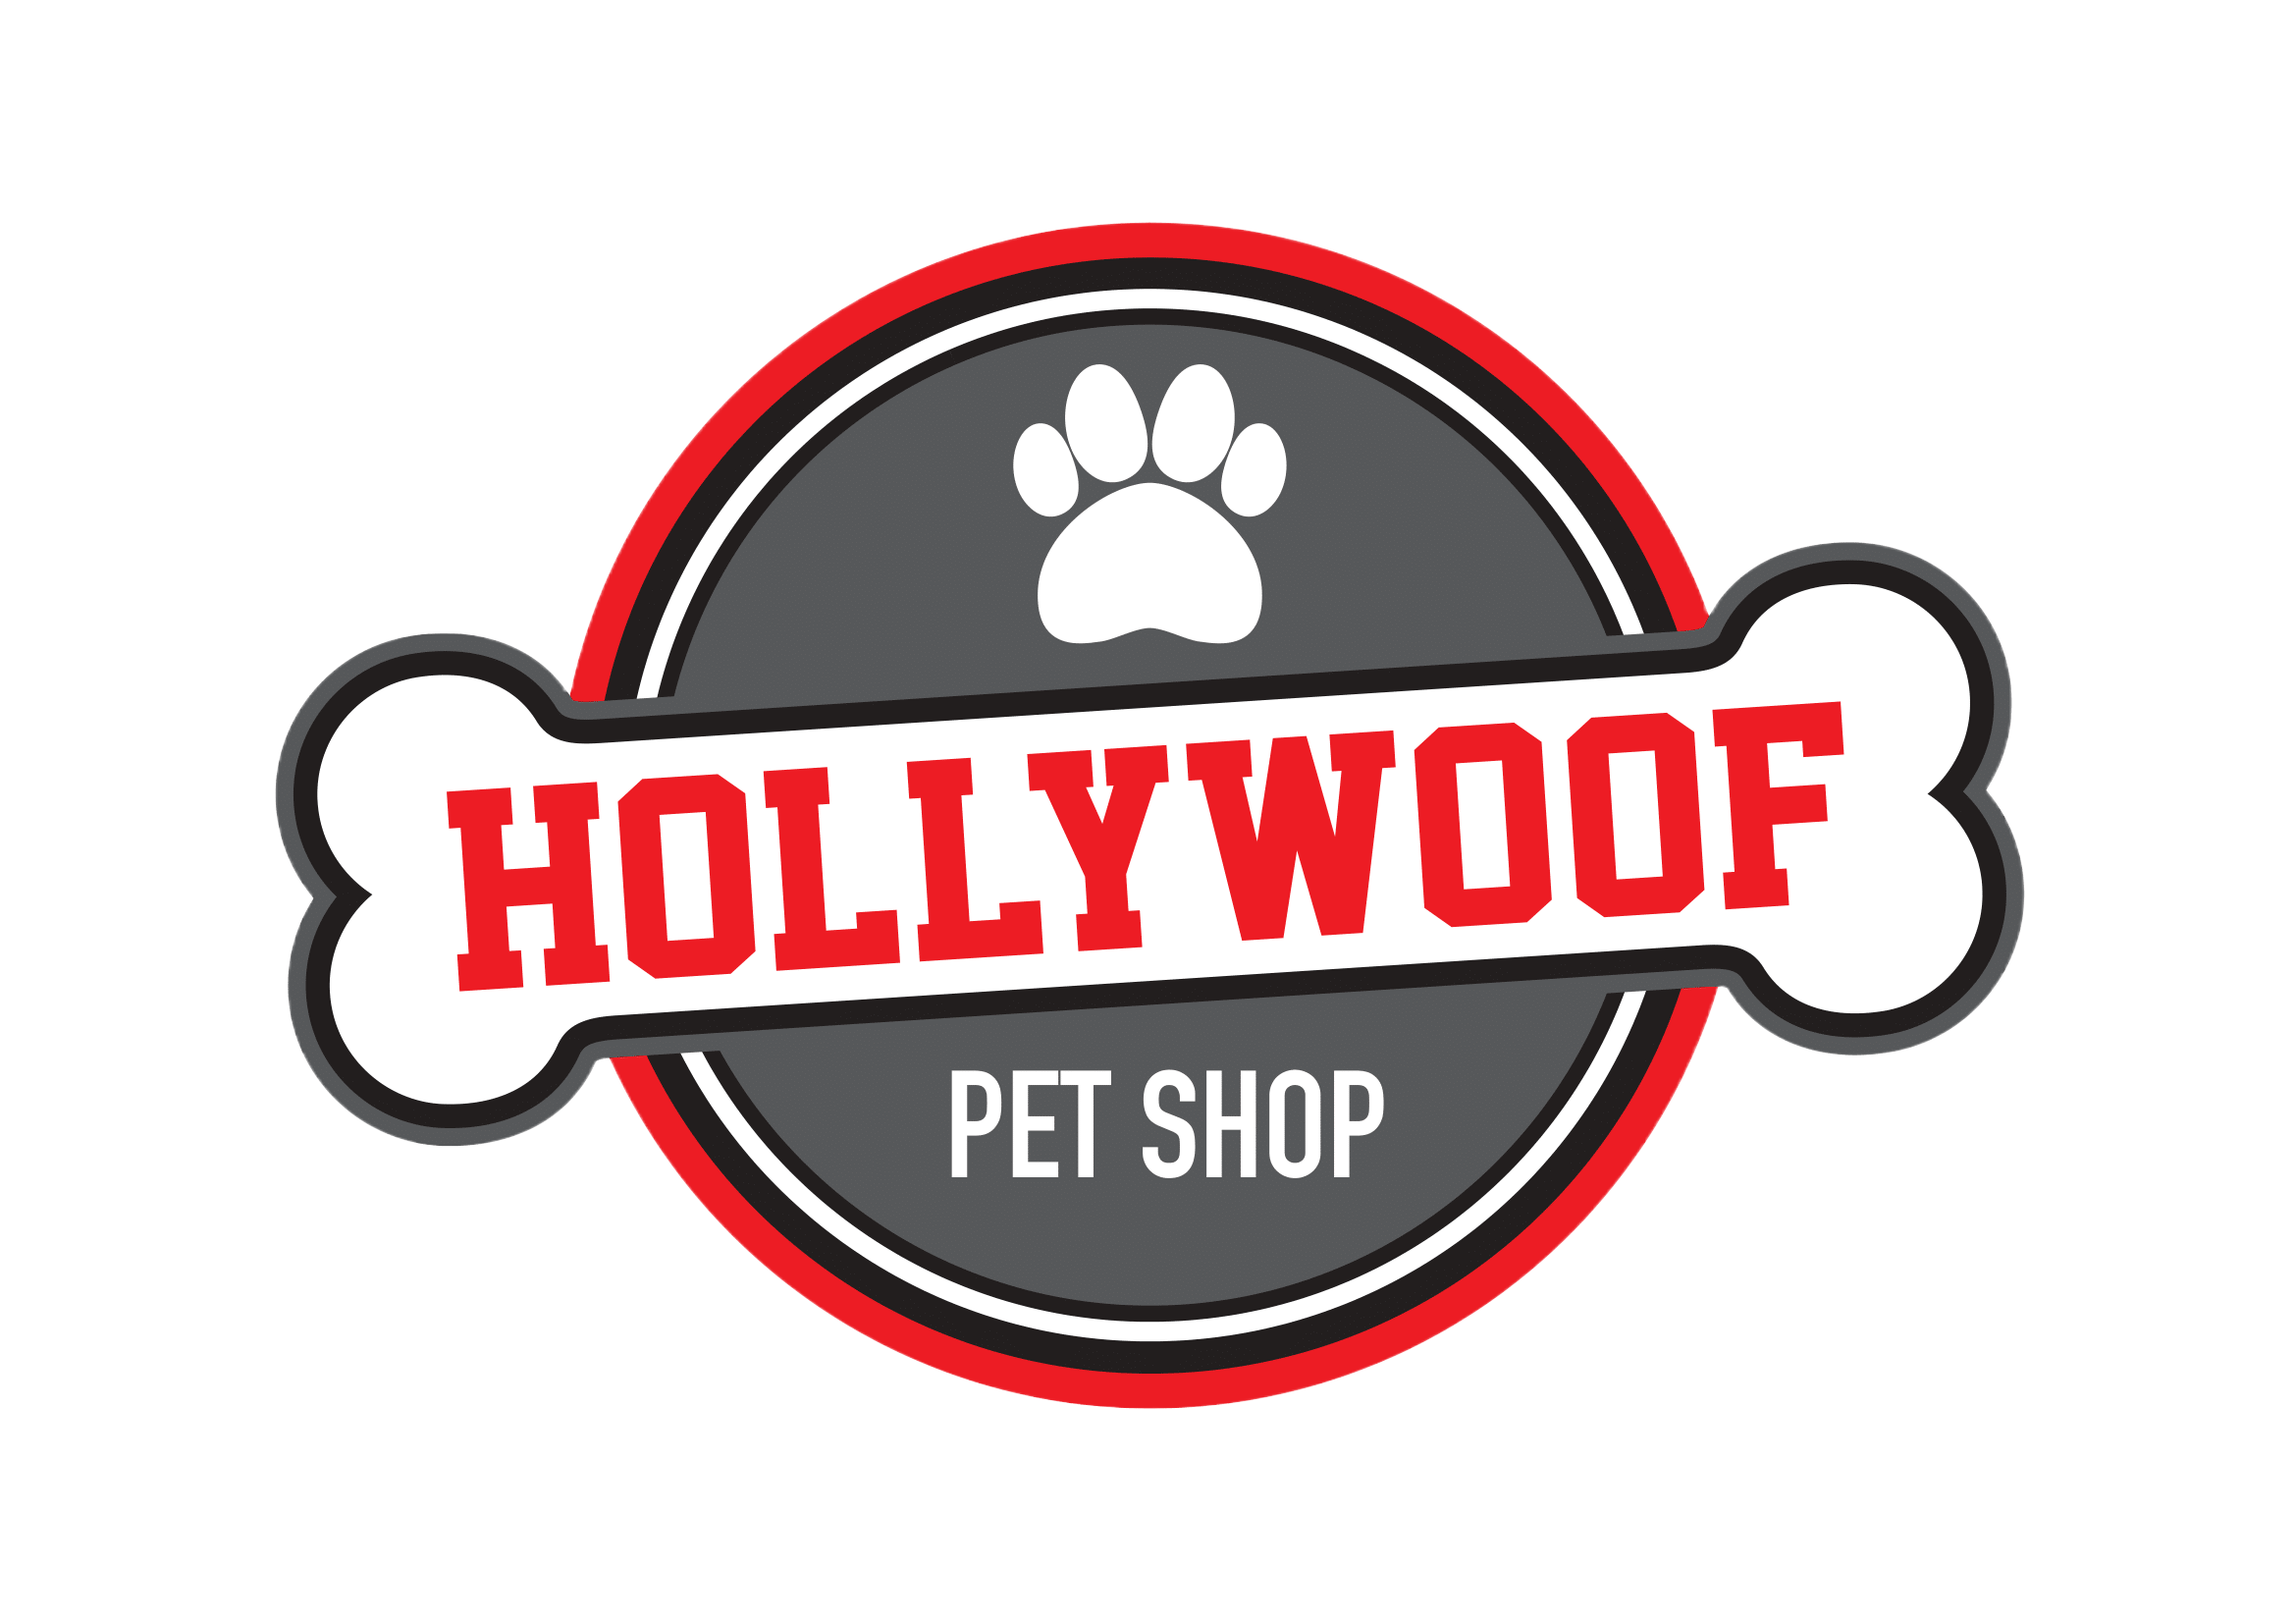 Hollywoof Pet Shop